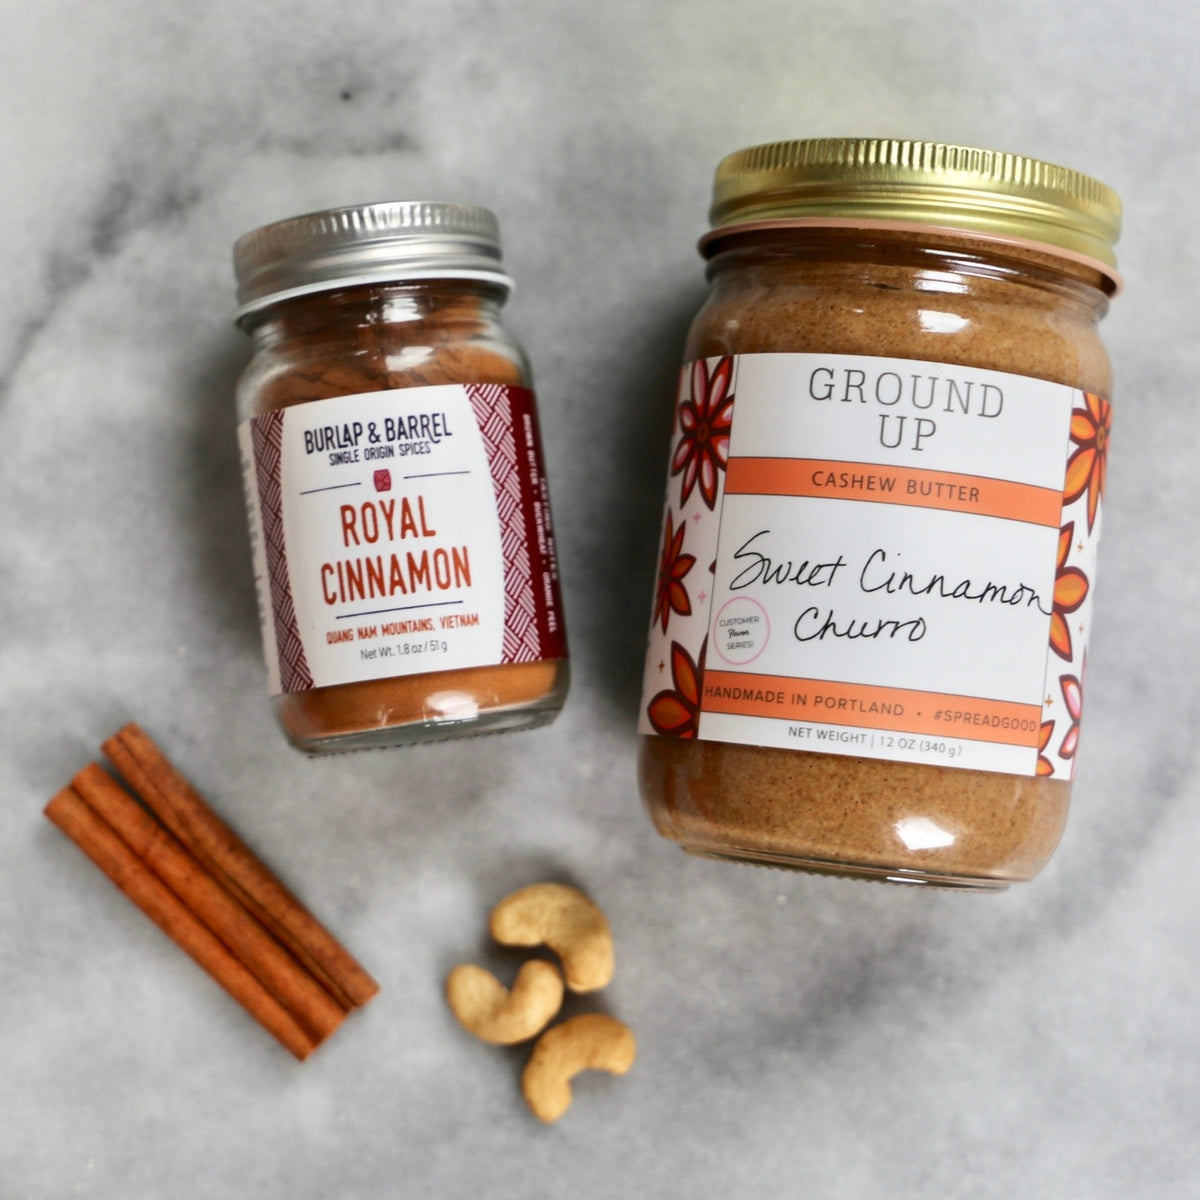 Ground Up Sweet Cinnamon Churro Nut Butter with Burlap & Barrel Royal Cinnamon